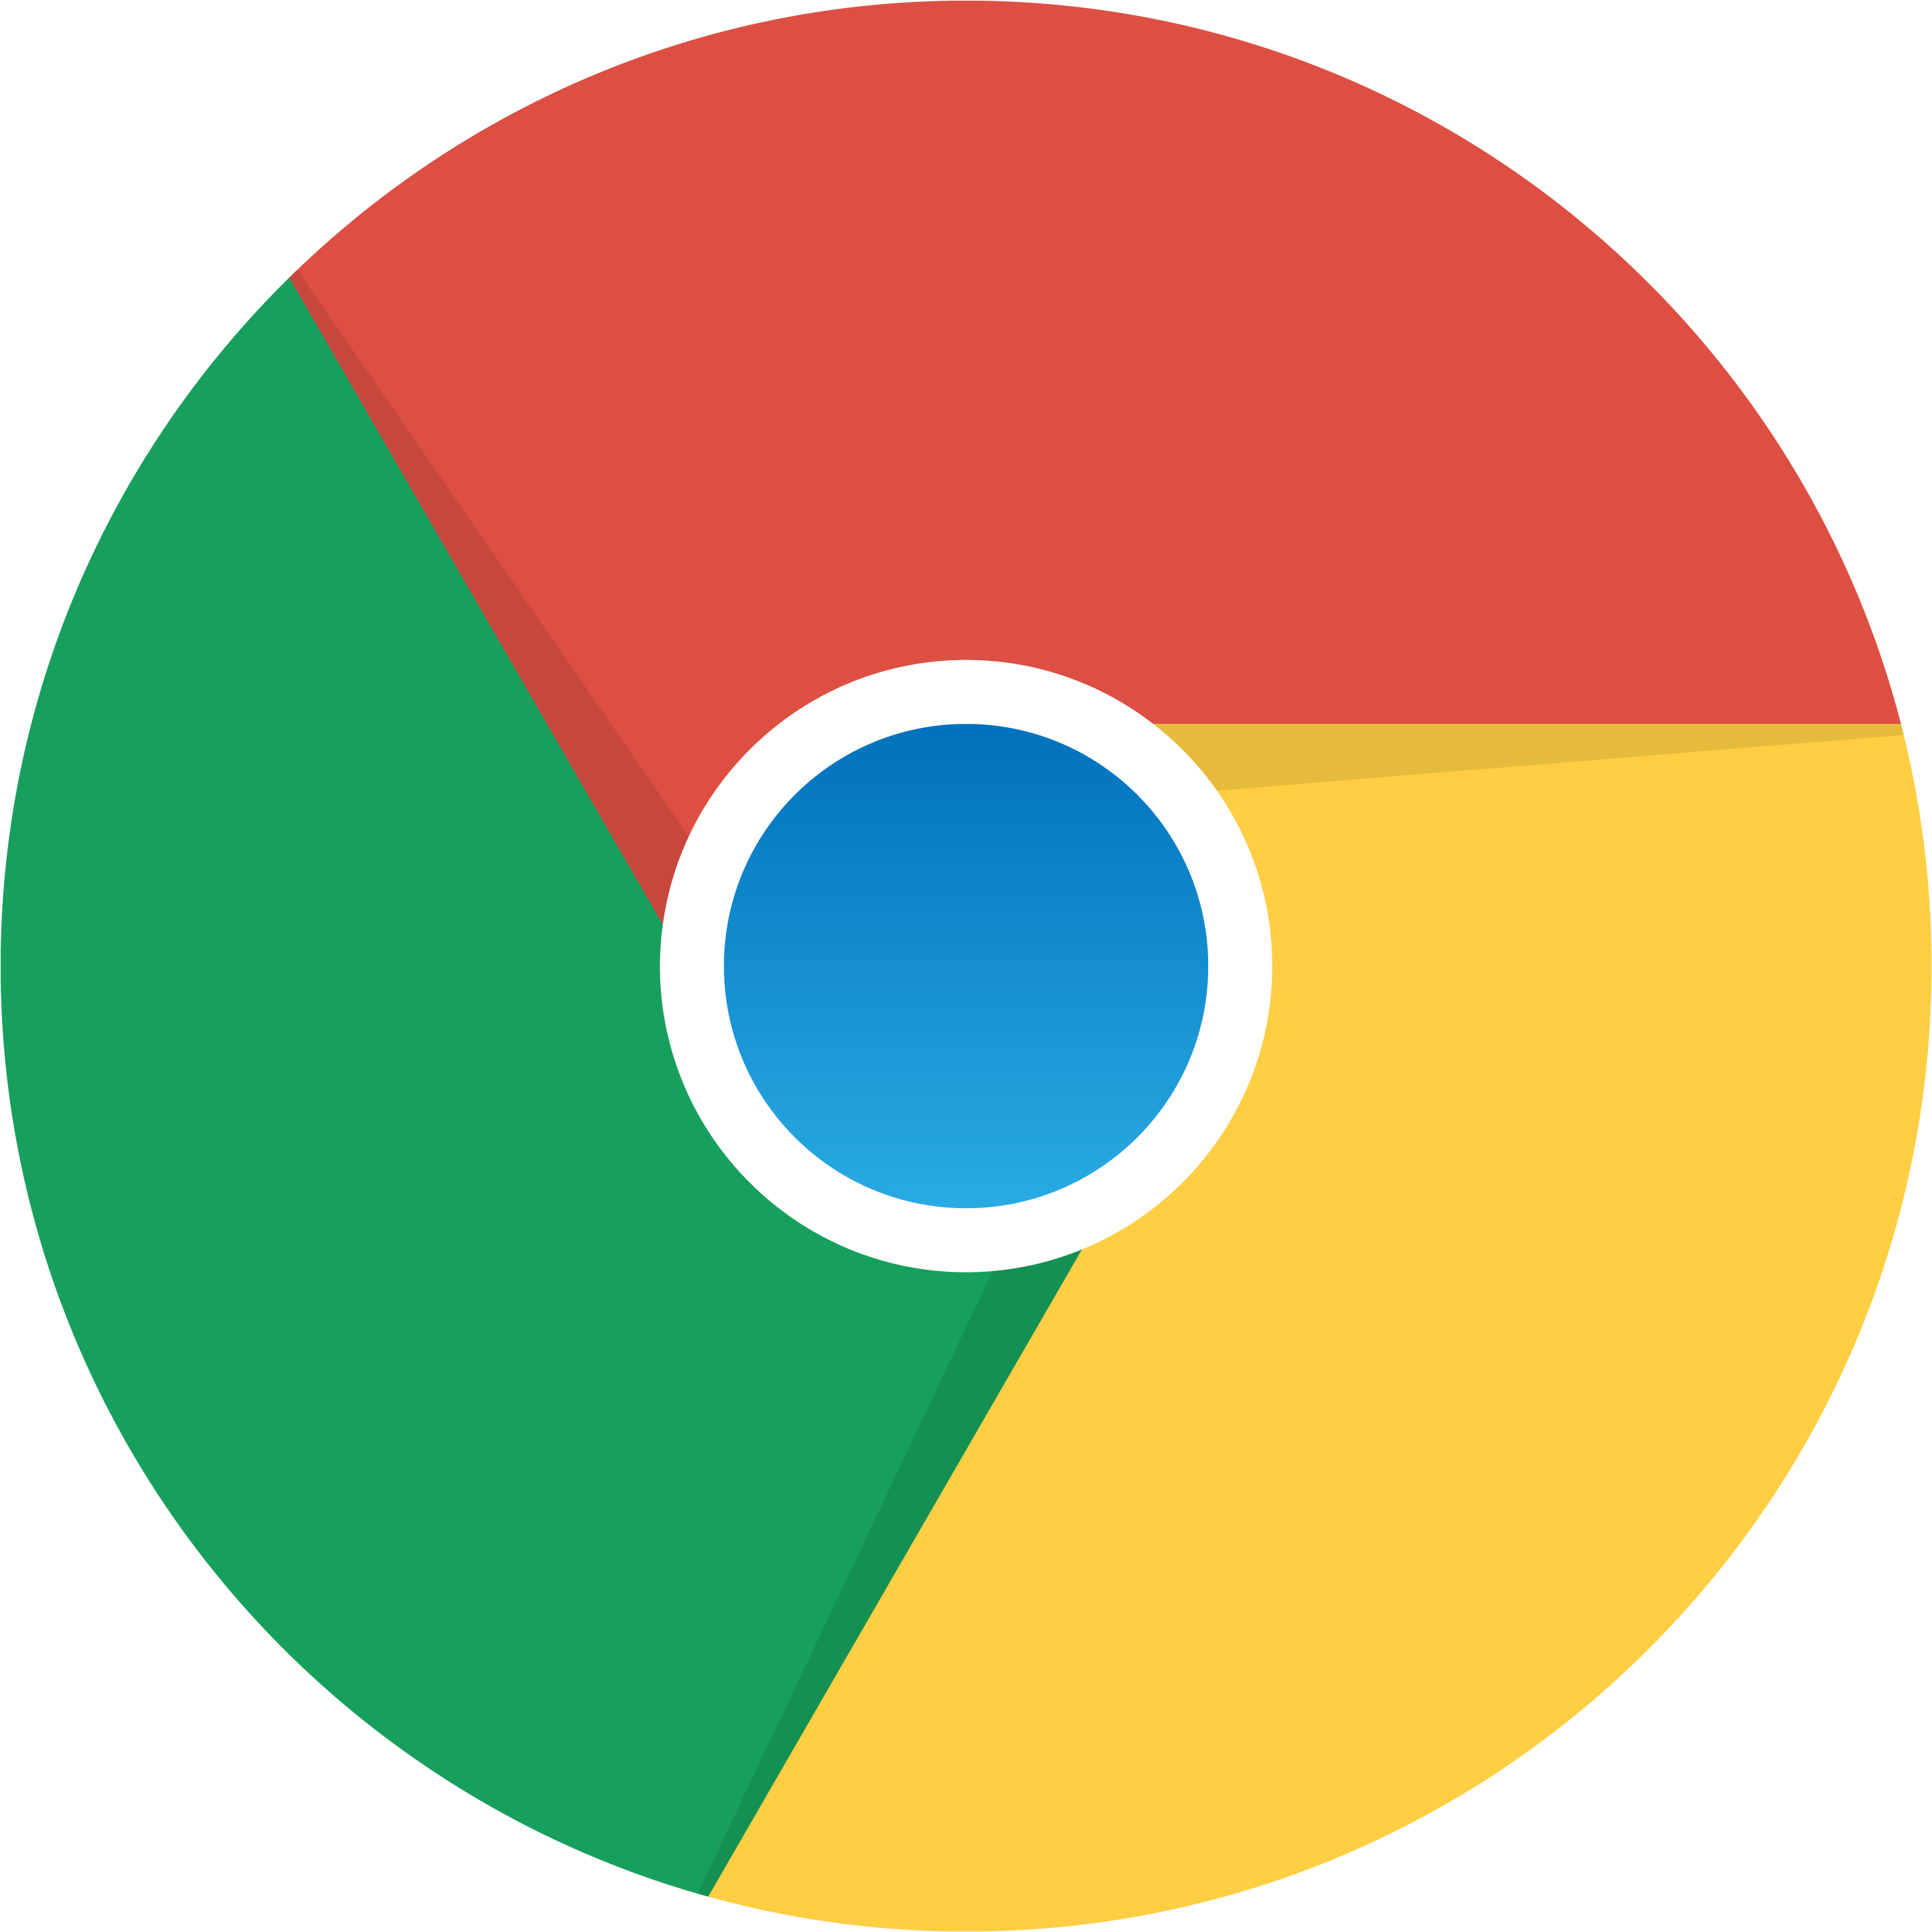 This Is My New Creative Work - Google Chrome (3000x3000)